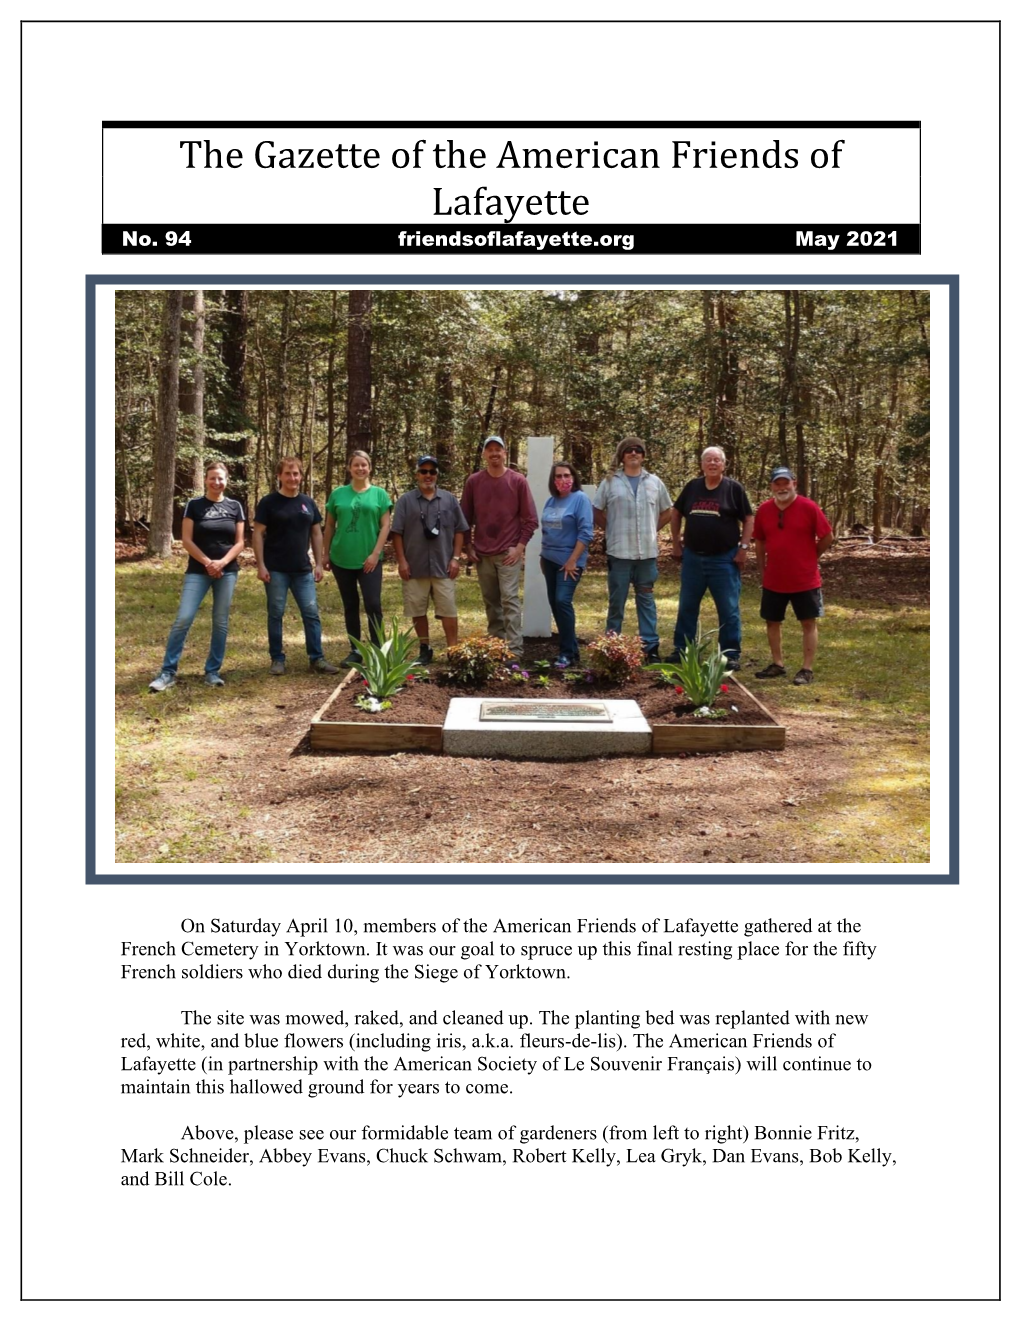 The Gazette of the American Friends of Lafayette No